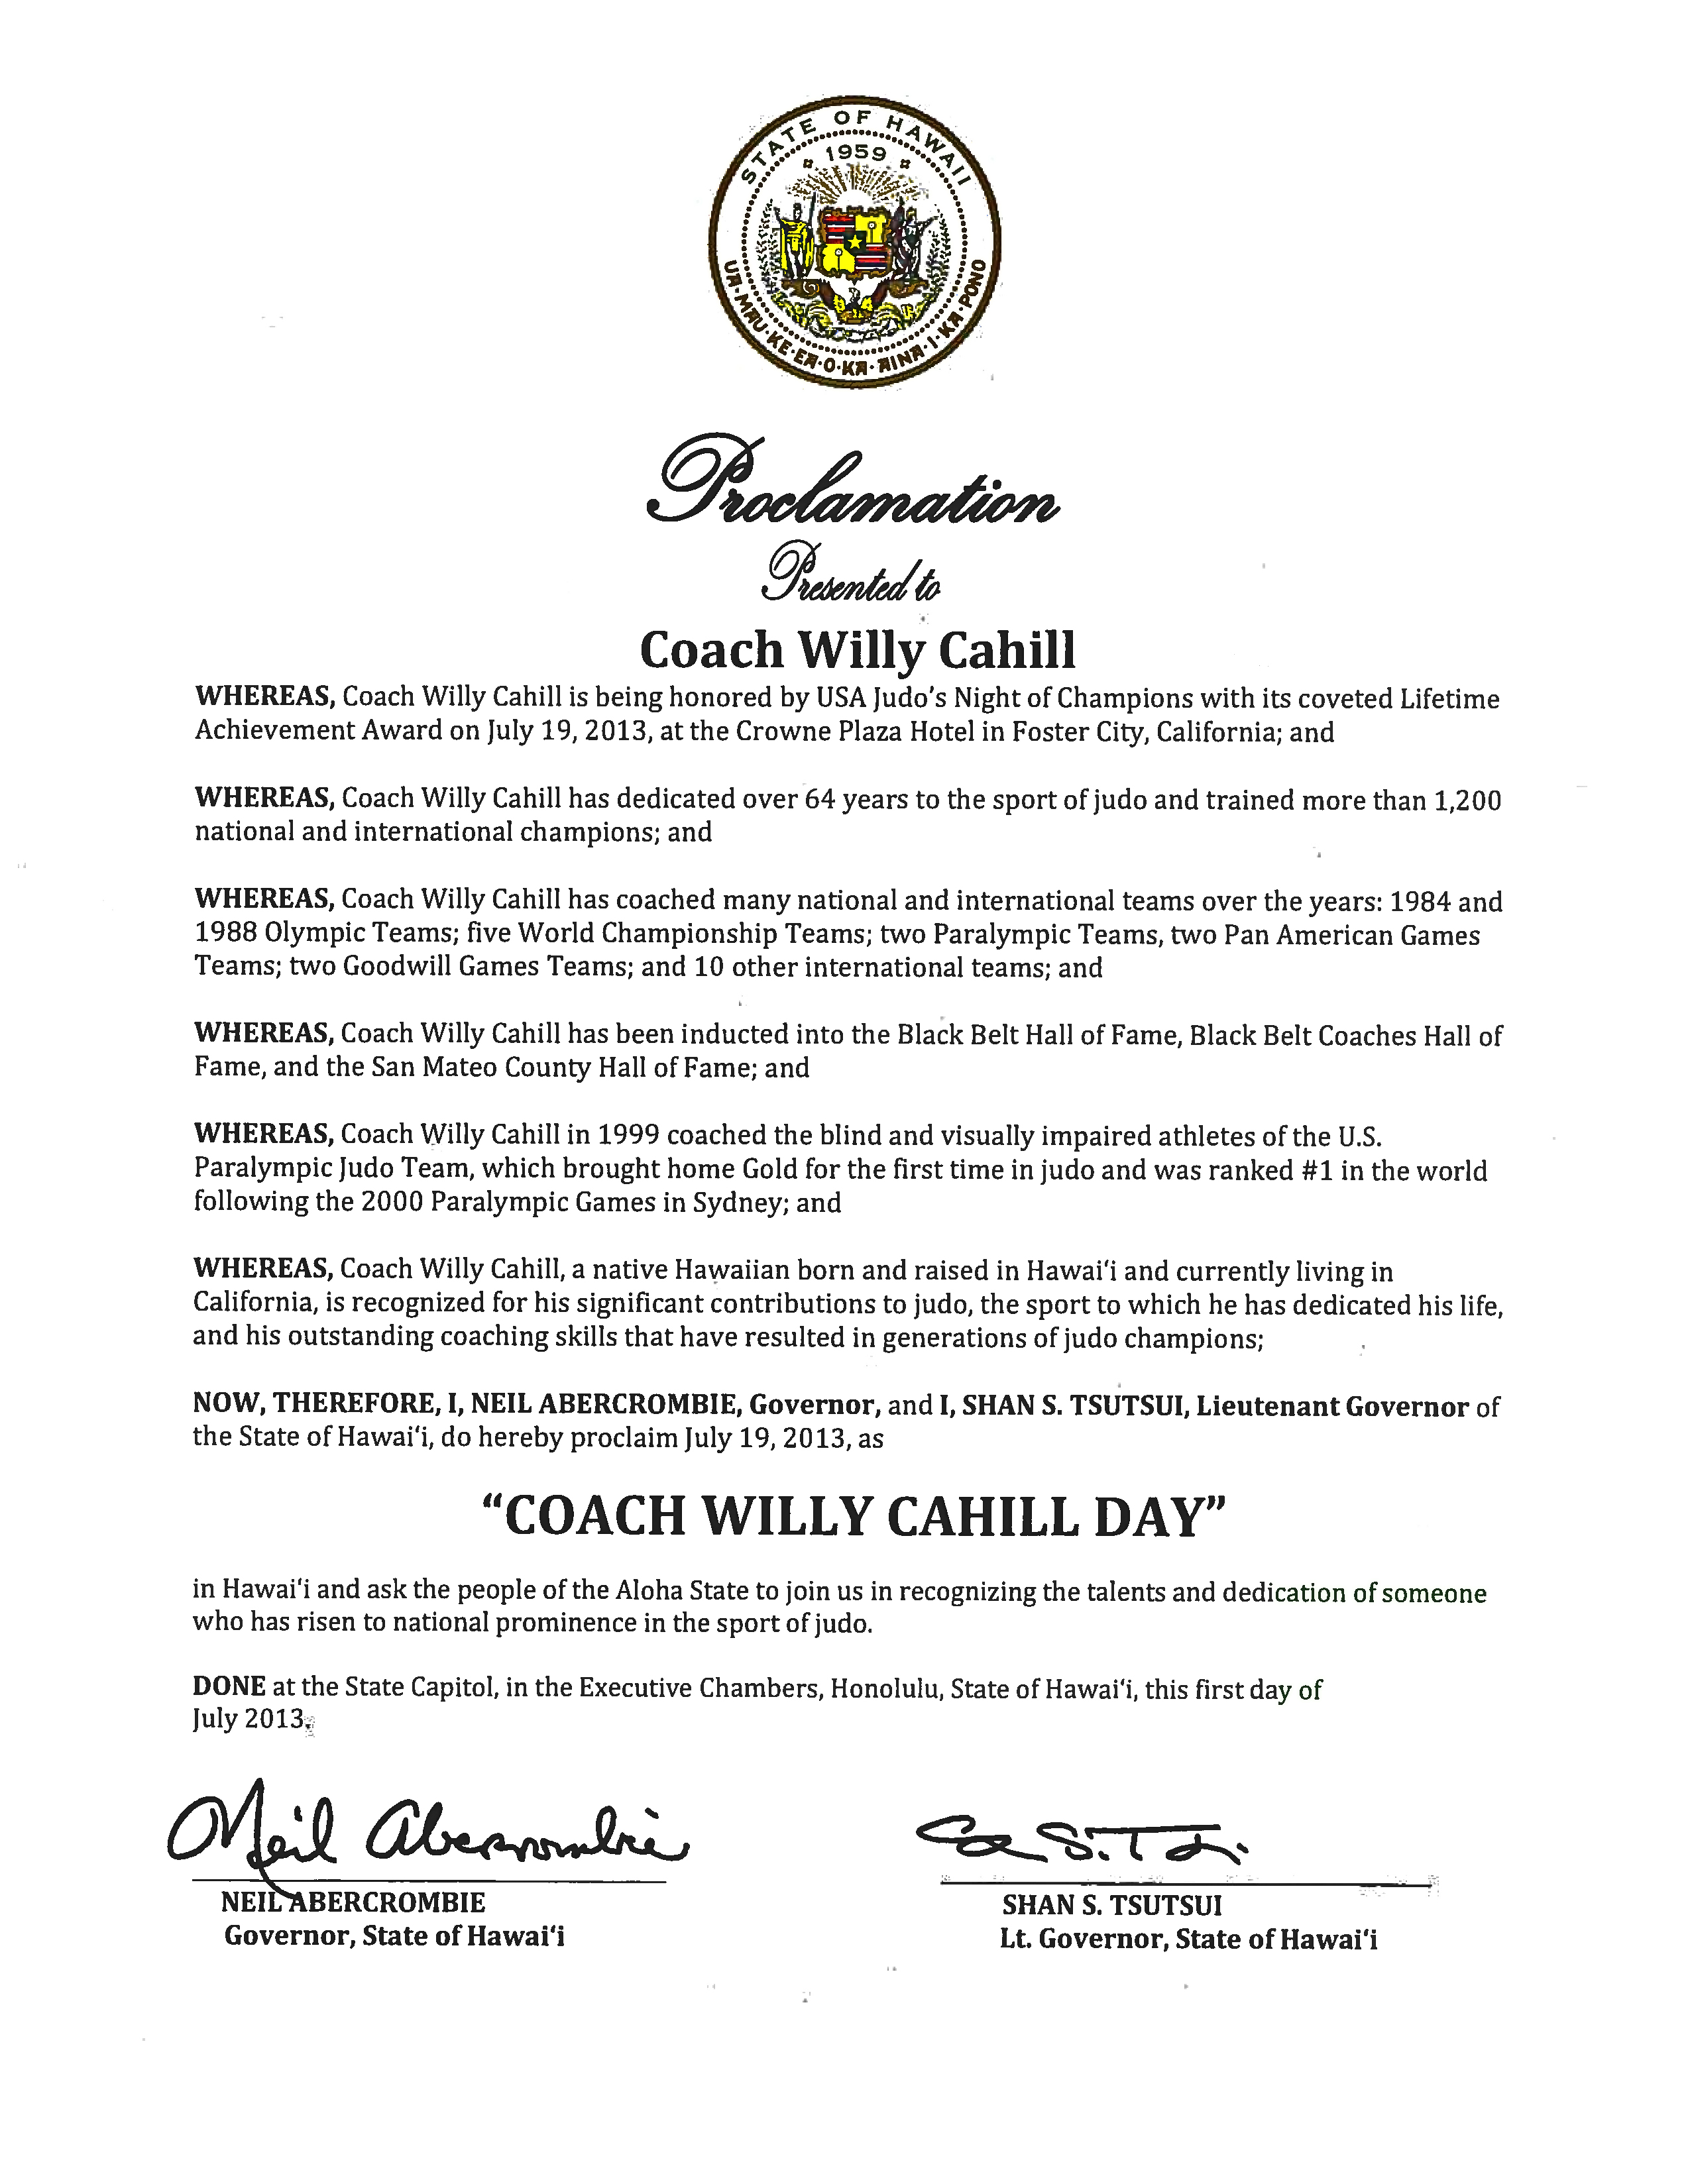 Hawaiian Proclamation - Coach Willy Cahill Day